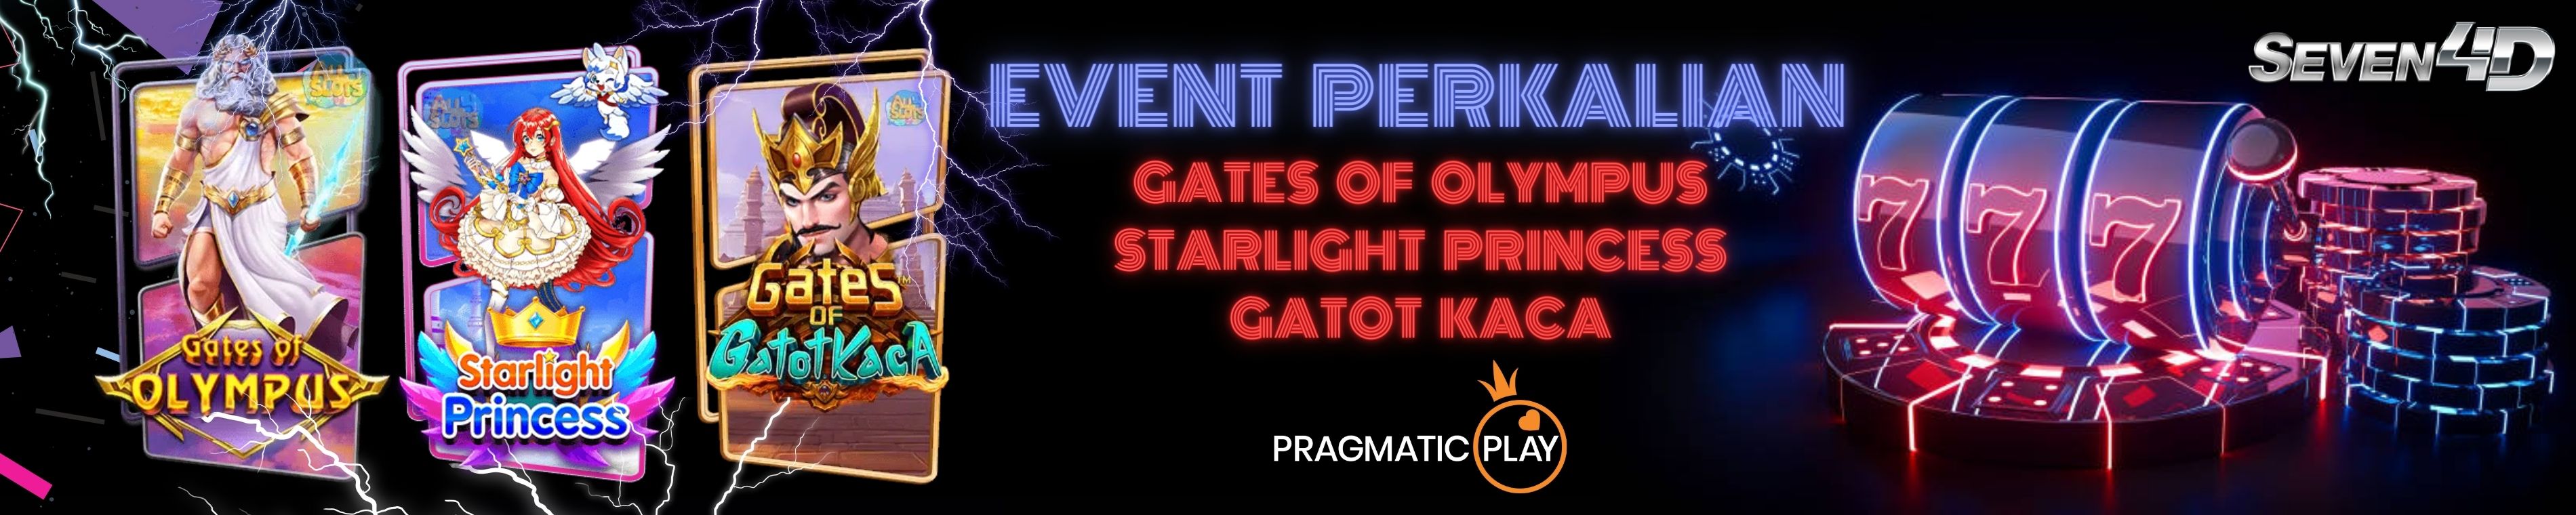 EVENT PERKALIAN GATES OF OLYMPUS , STARLIGHT PRINCESS, GATOT KACA